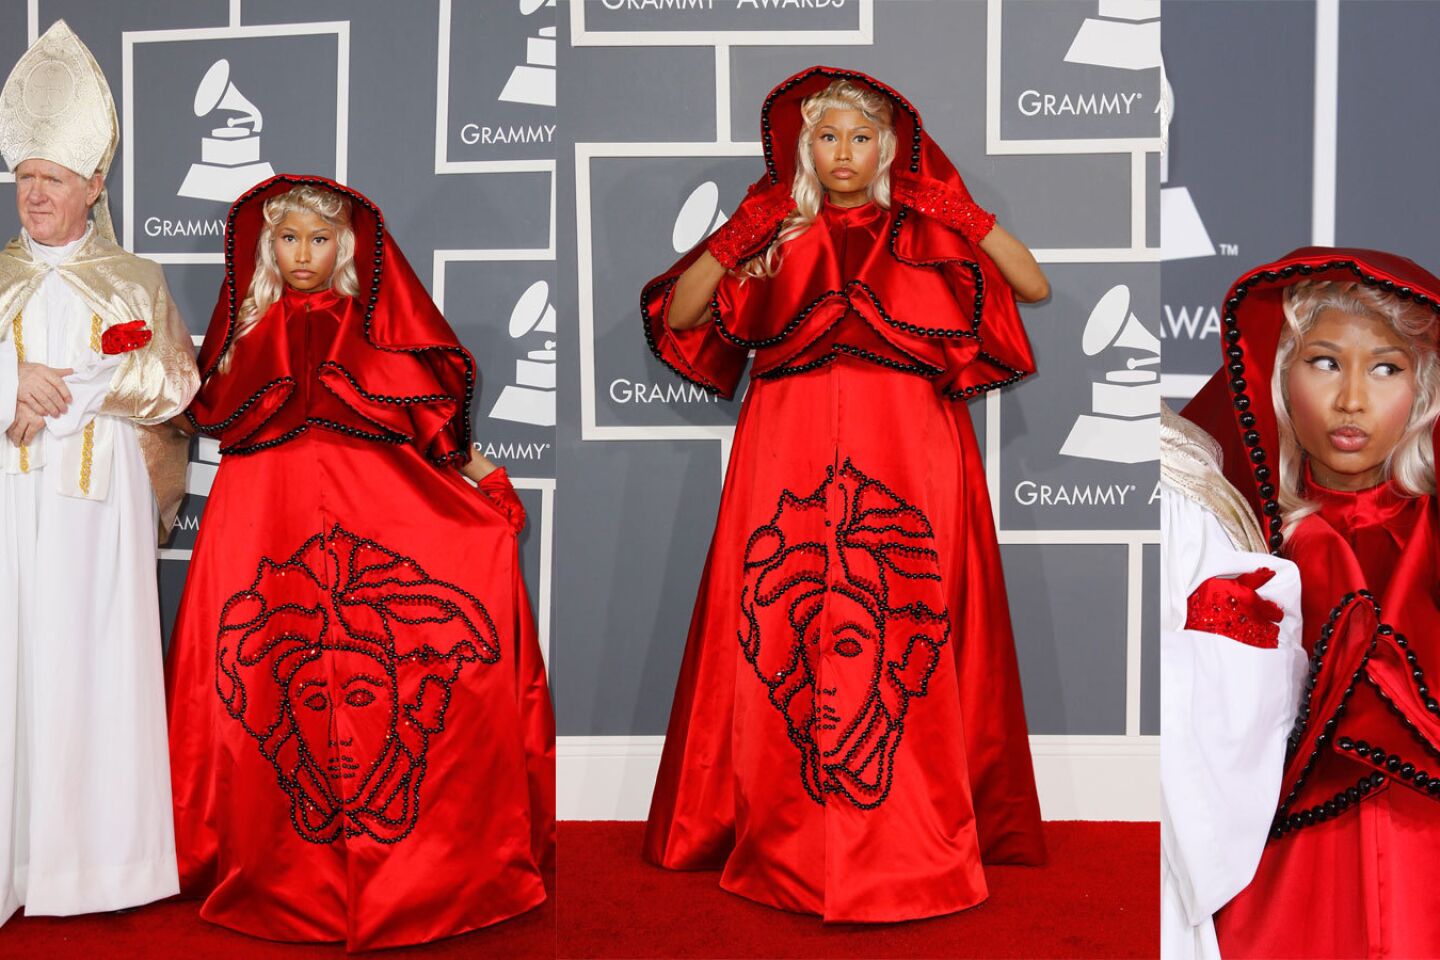 Grammys: Hall of shame